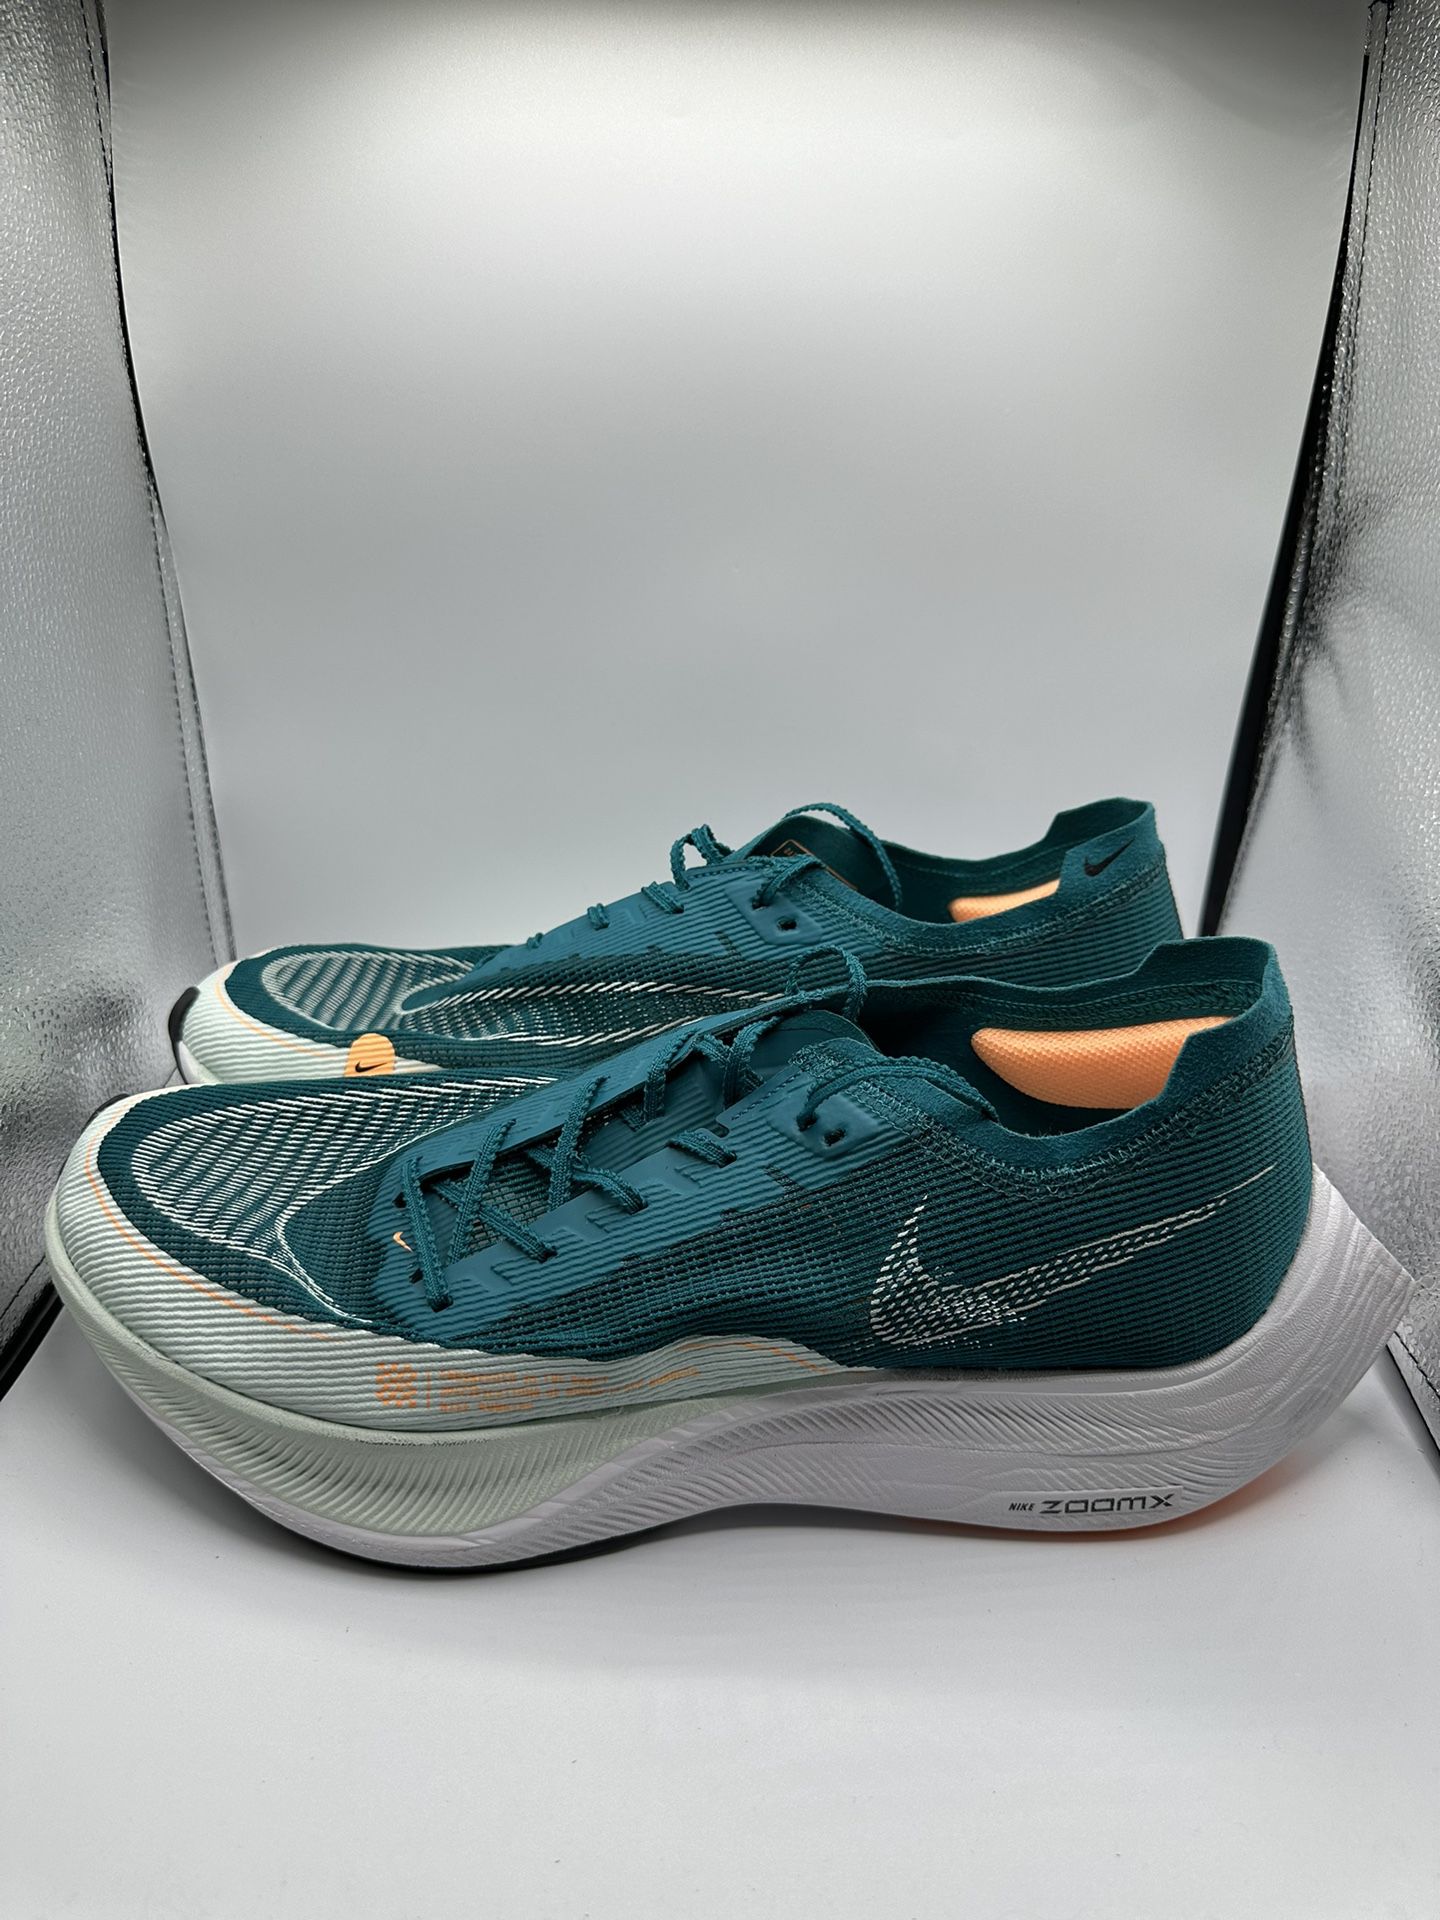 Nike ZoomX Vaporfly Next% 2 “Bright Spruce”